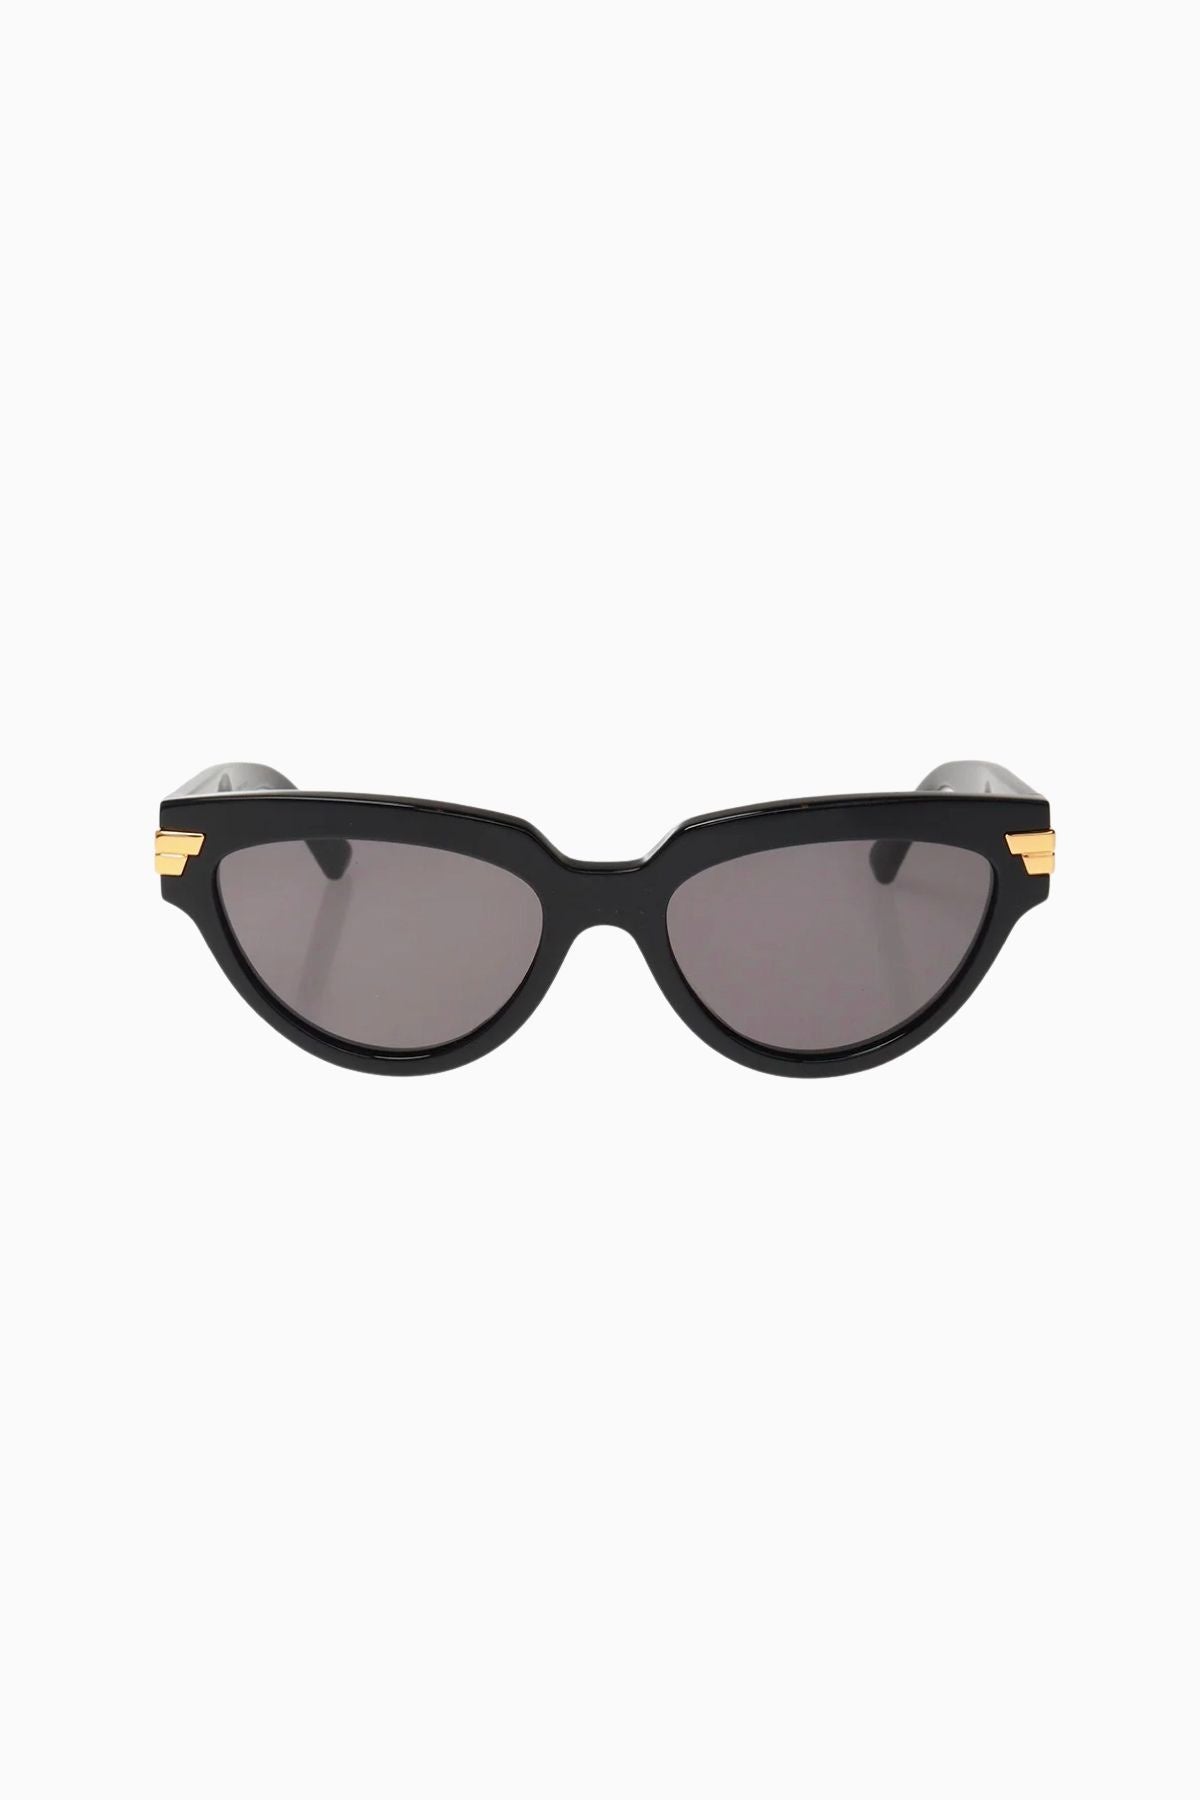 Bottega Veneta Cat Eye Sunglasses - Black Grey